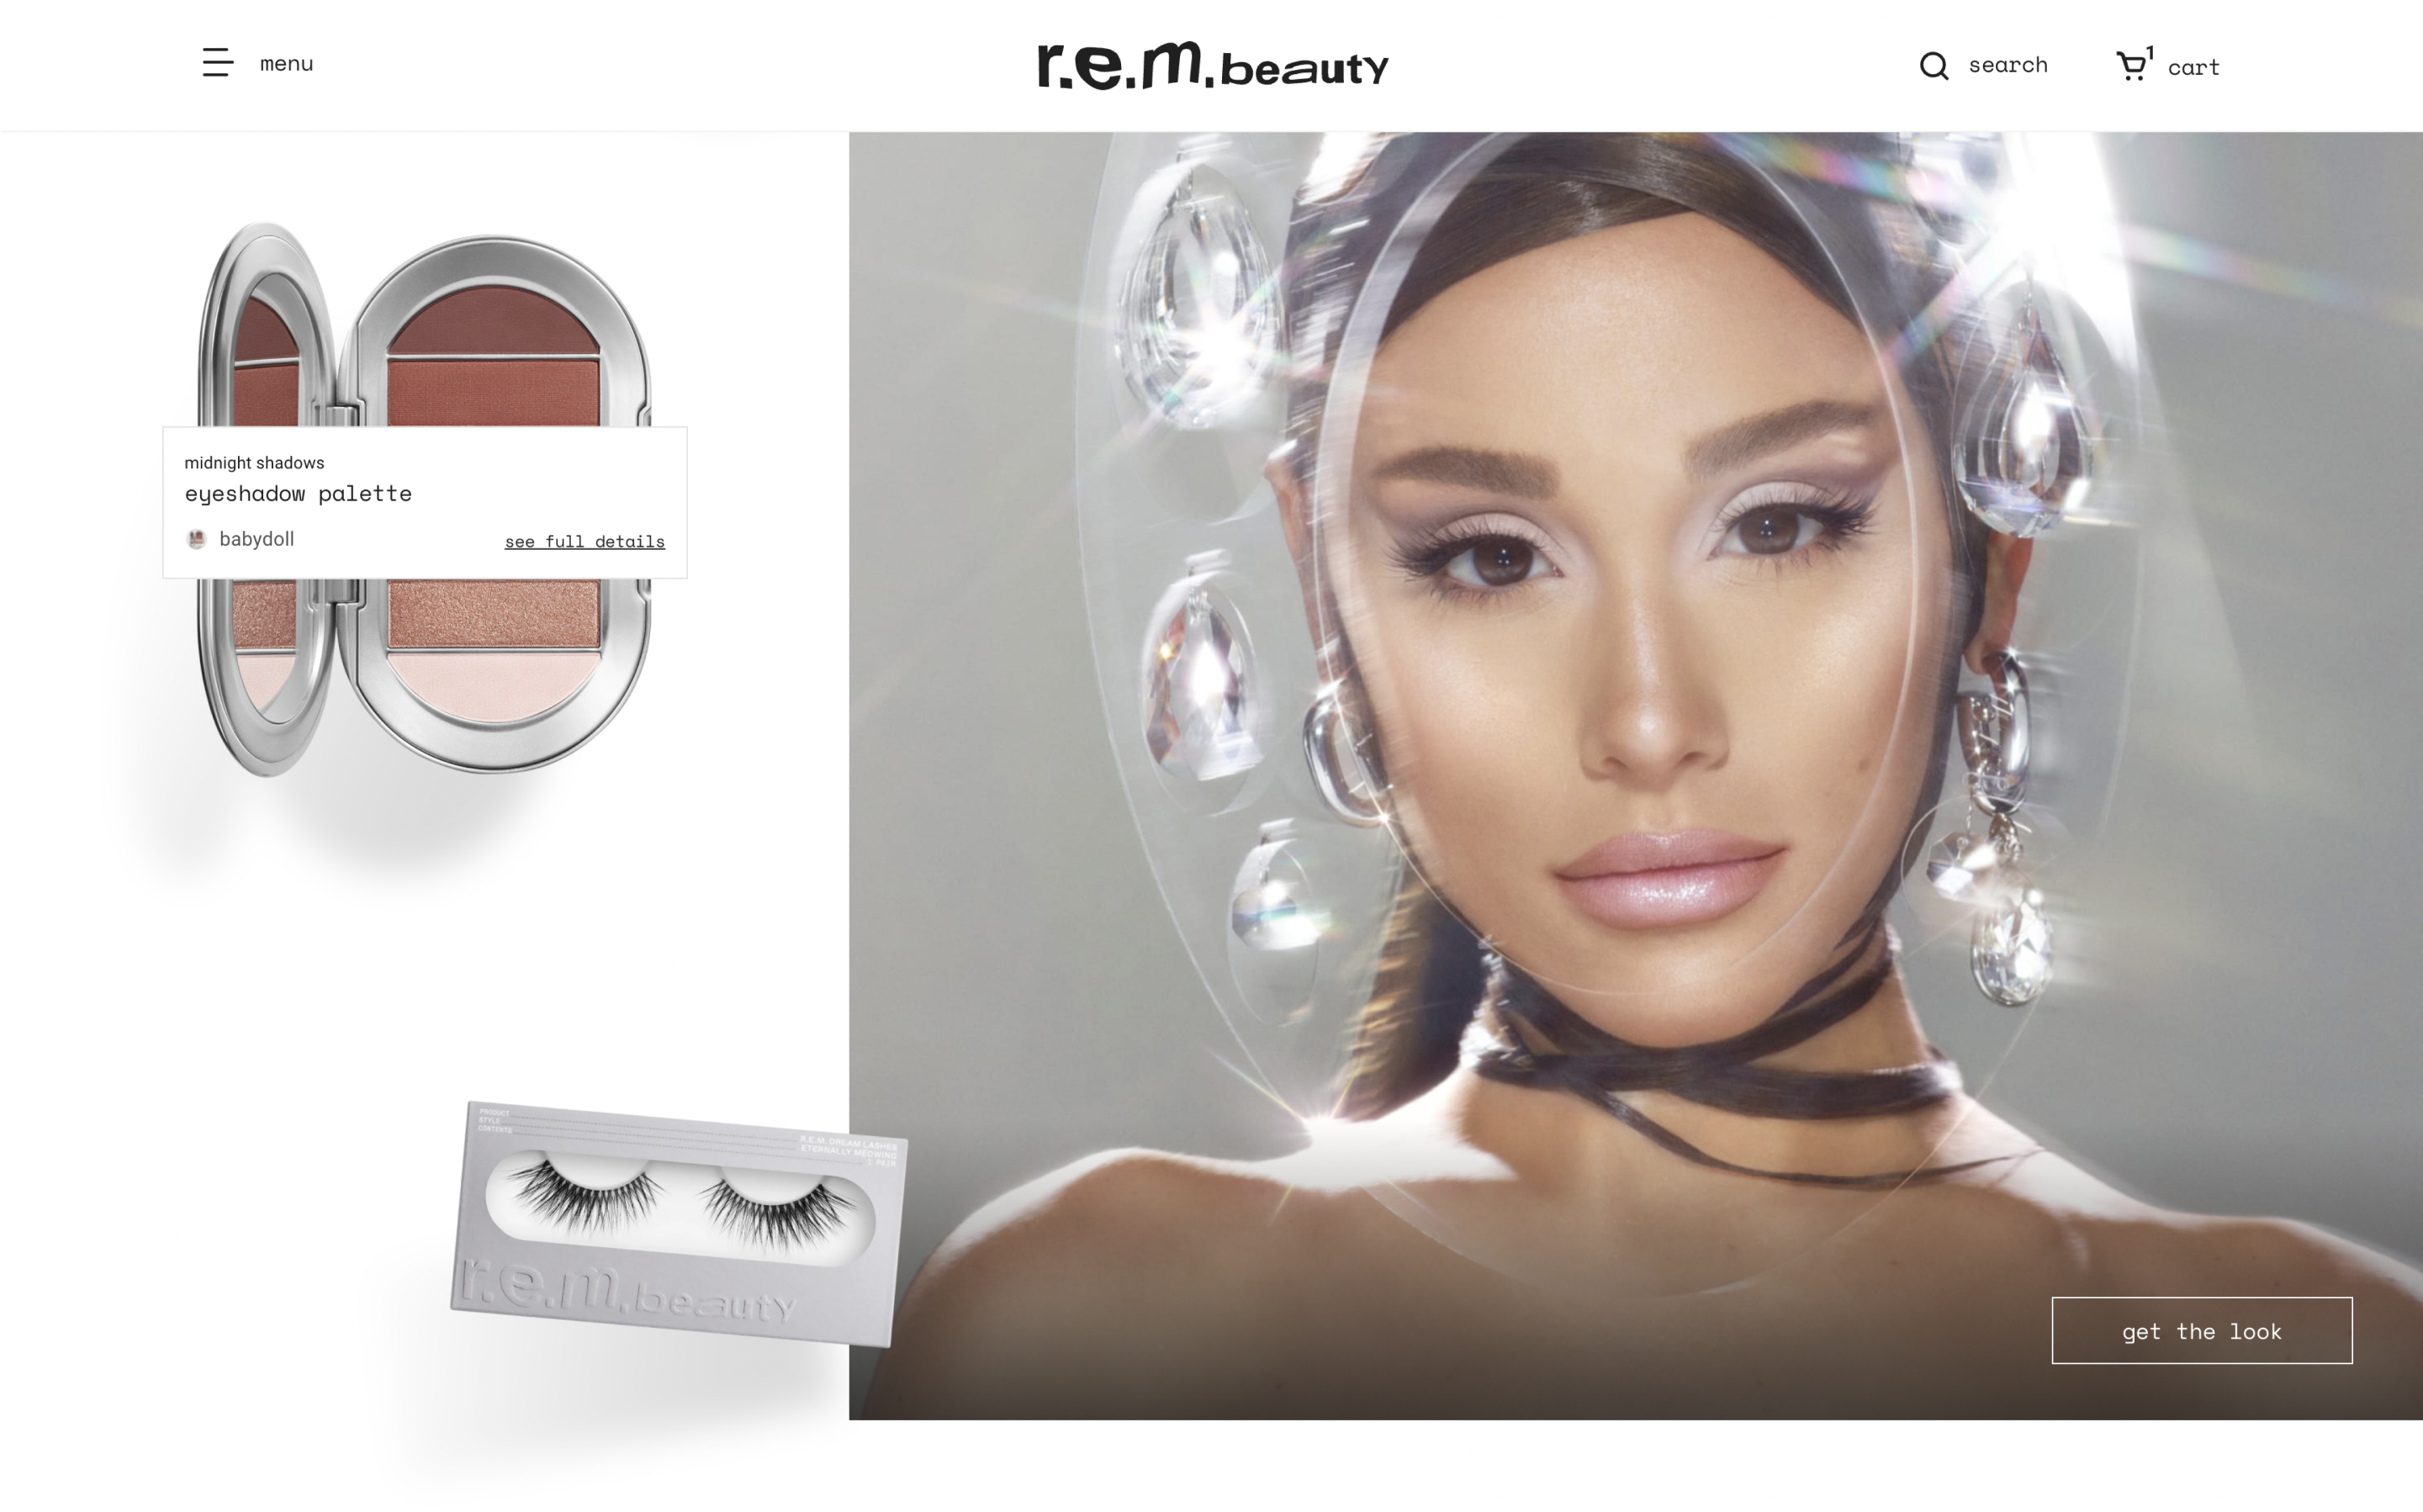 Desktop screenshot of r.e.m.'s shoppable look section